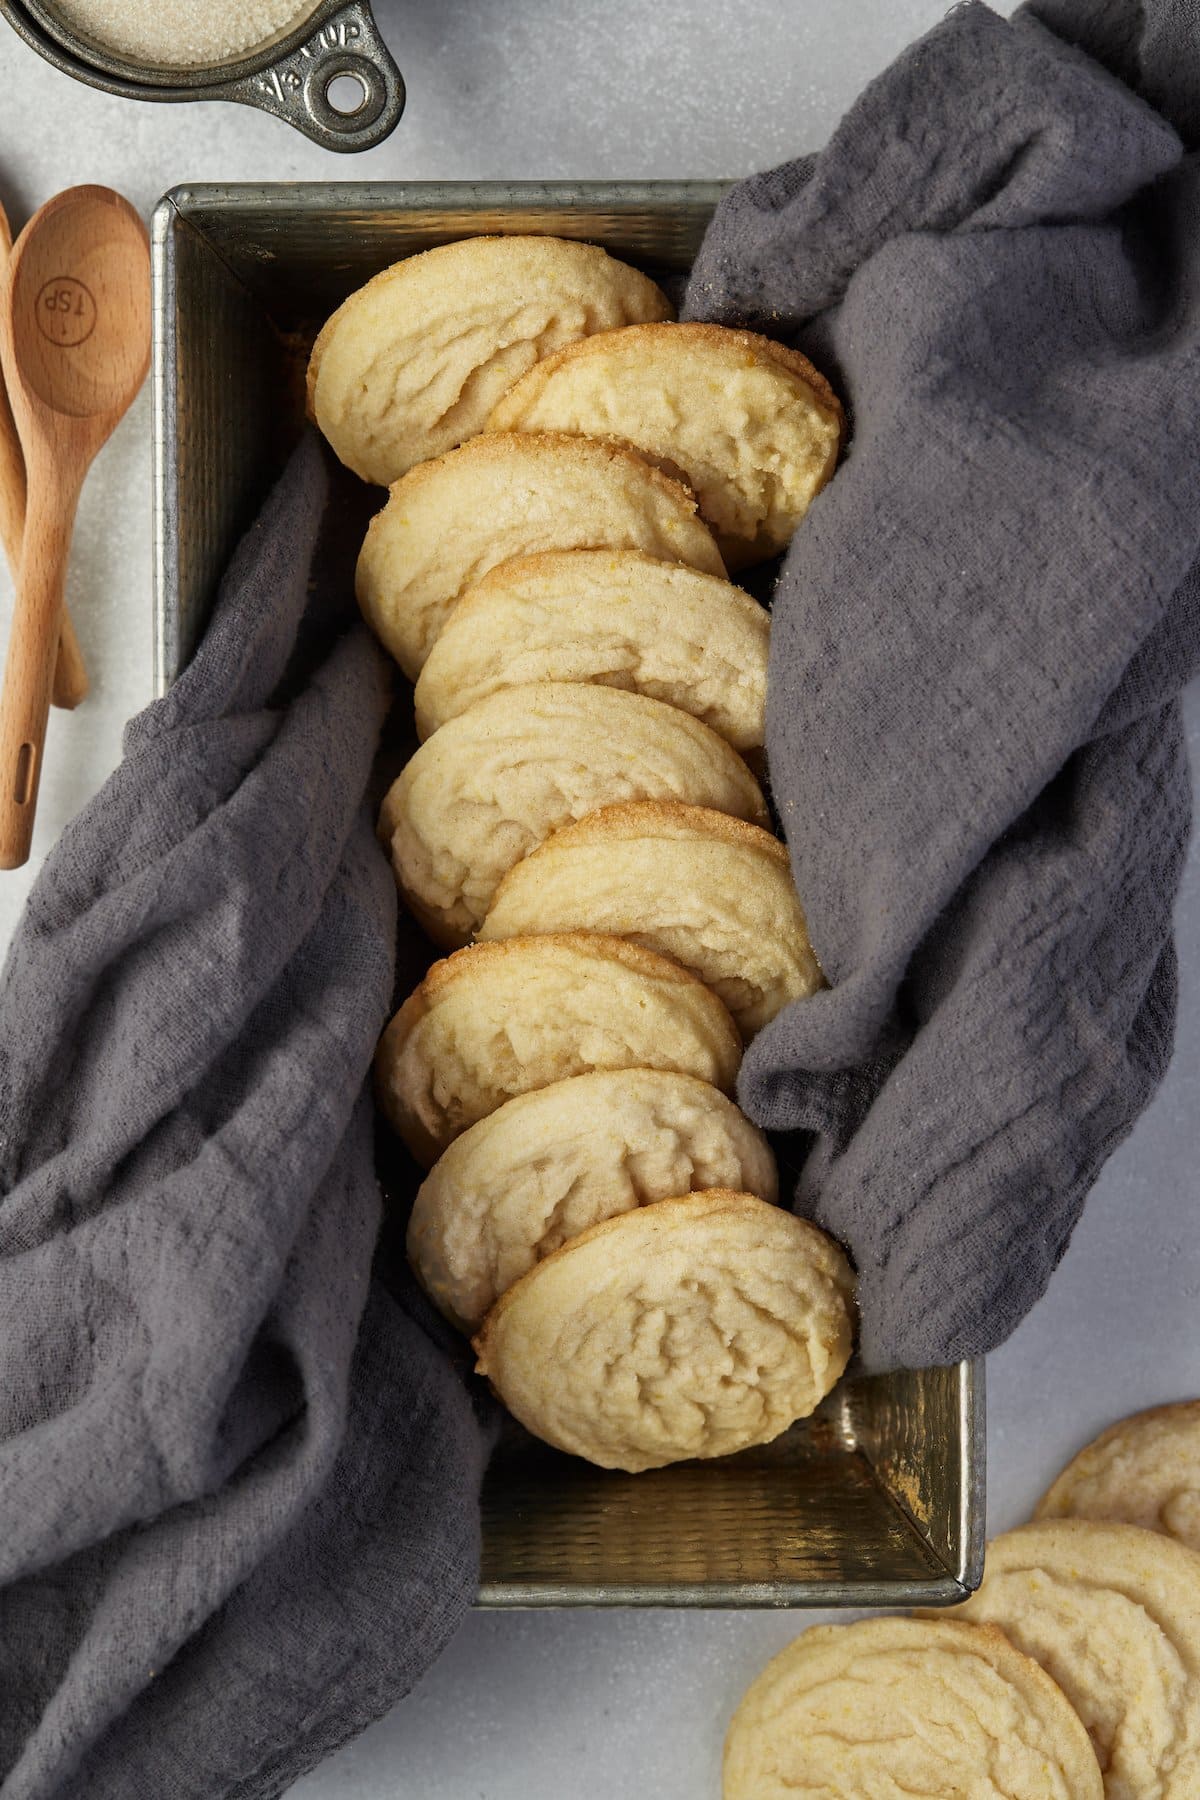 Amish sugar cookies tucked into a cloth.